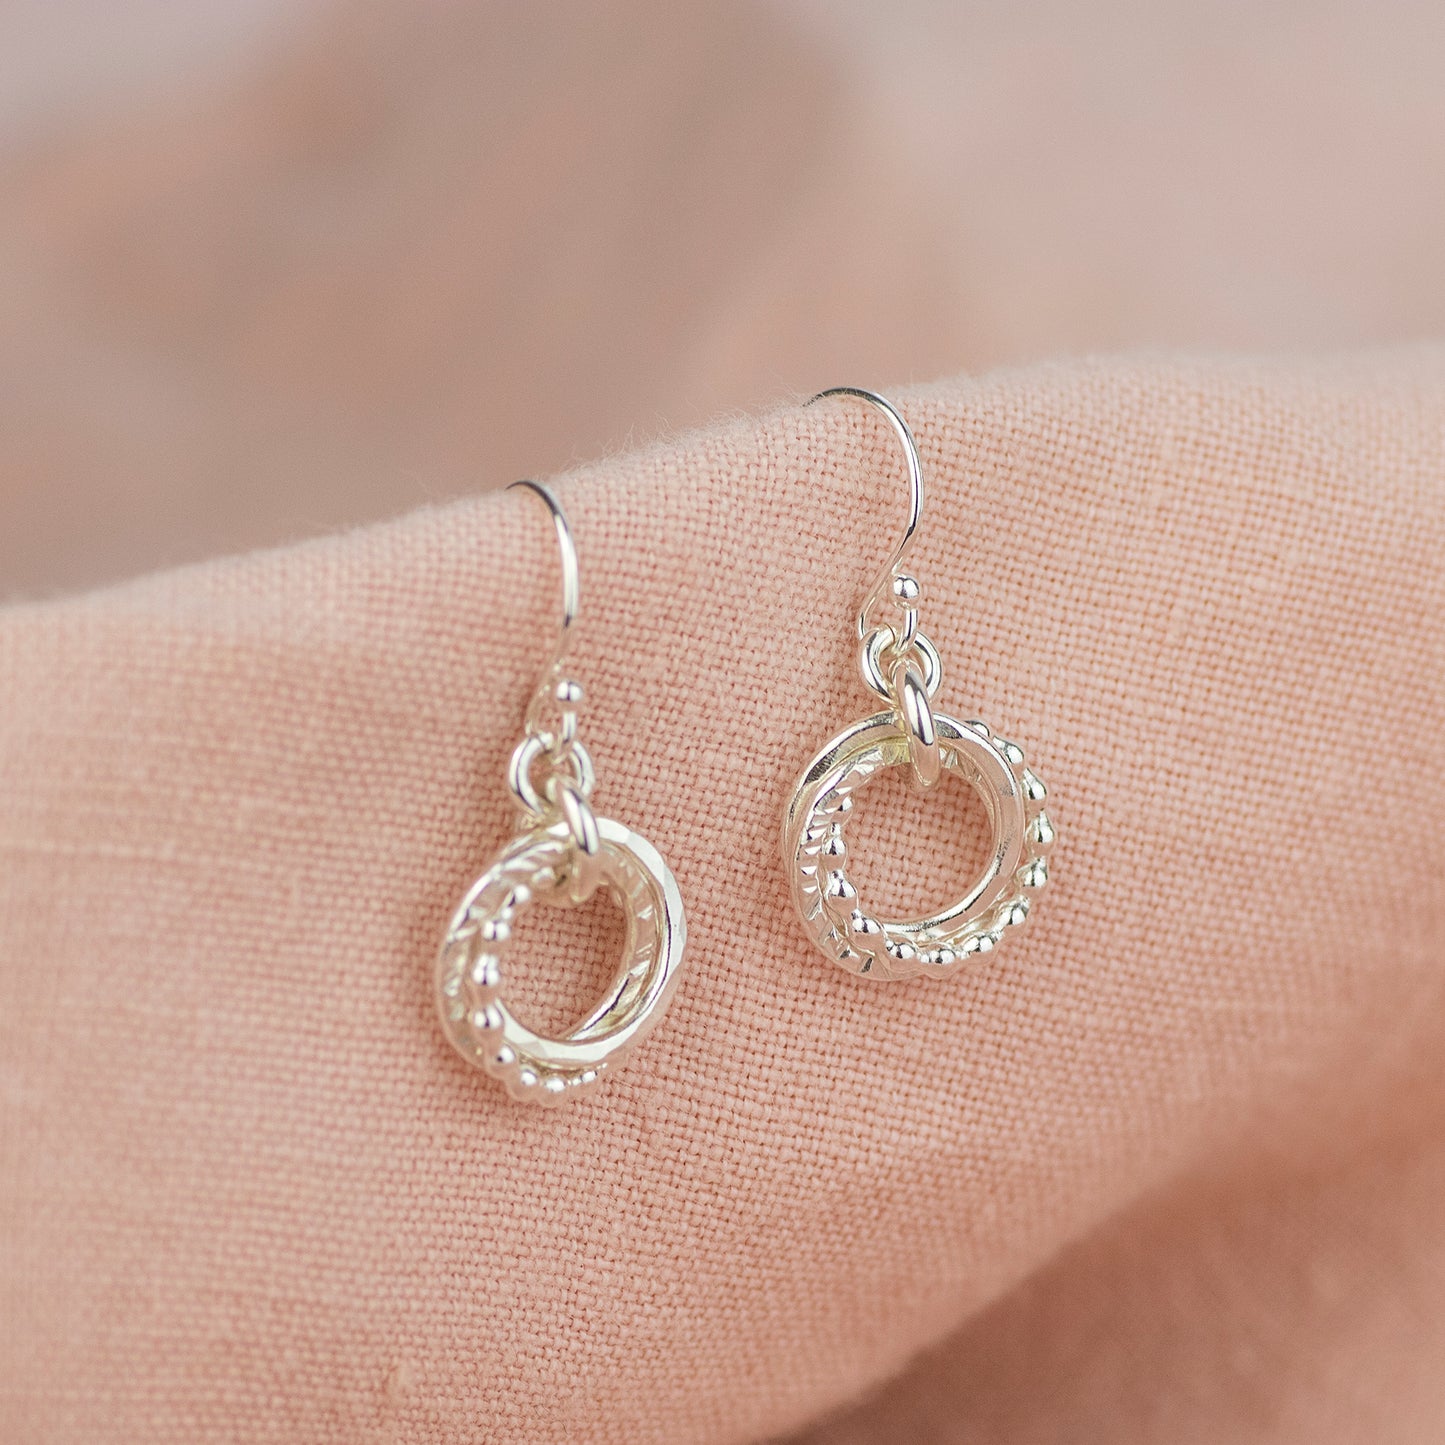 Sisters Earrings - 3 Sisters Linked for a Lifetime - Silver Love Knot Earrings